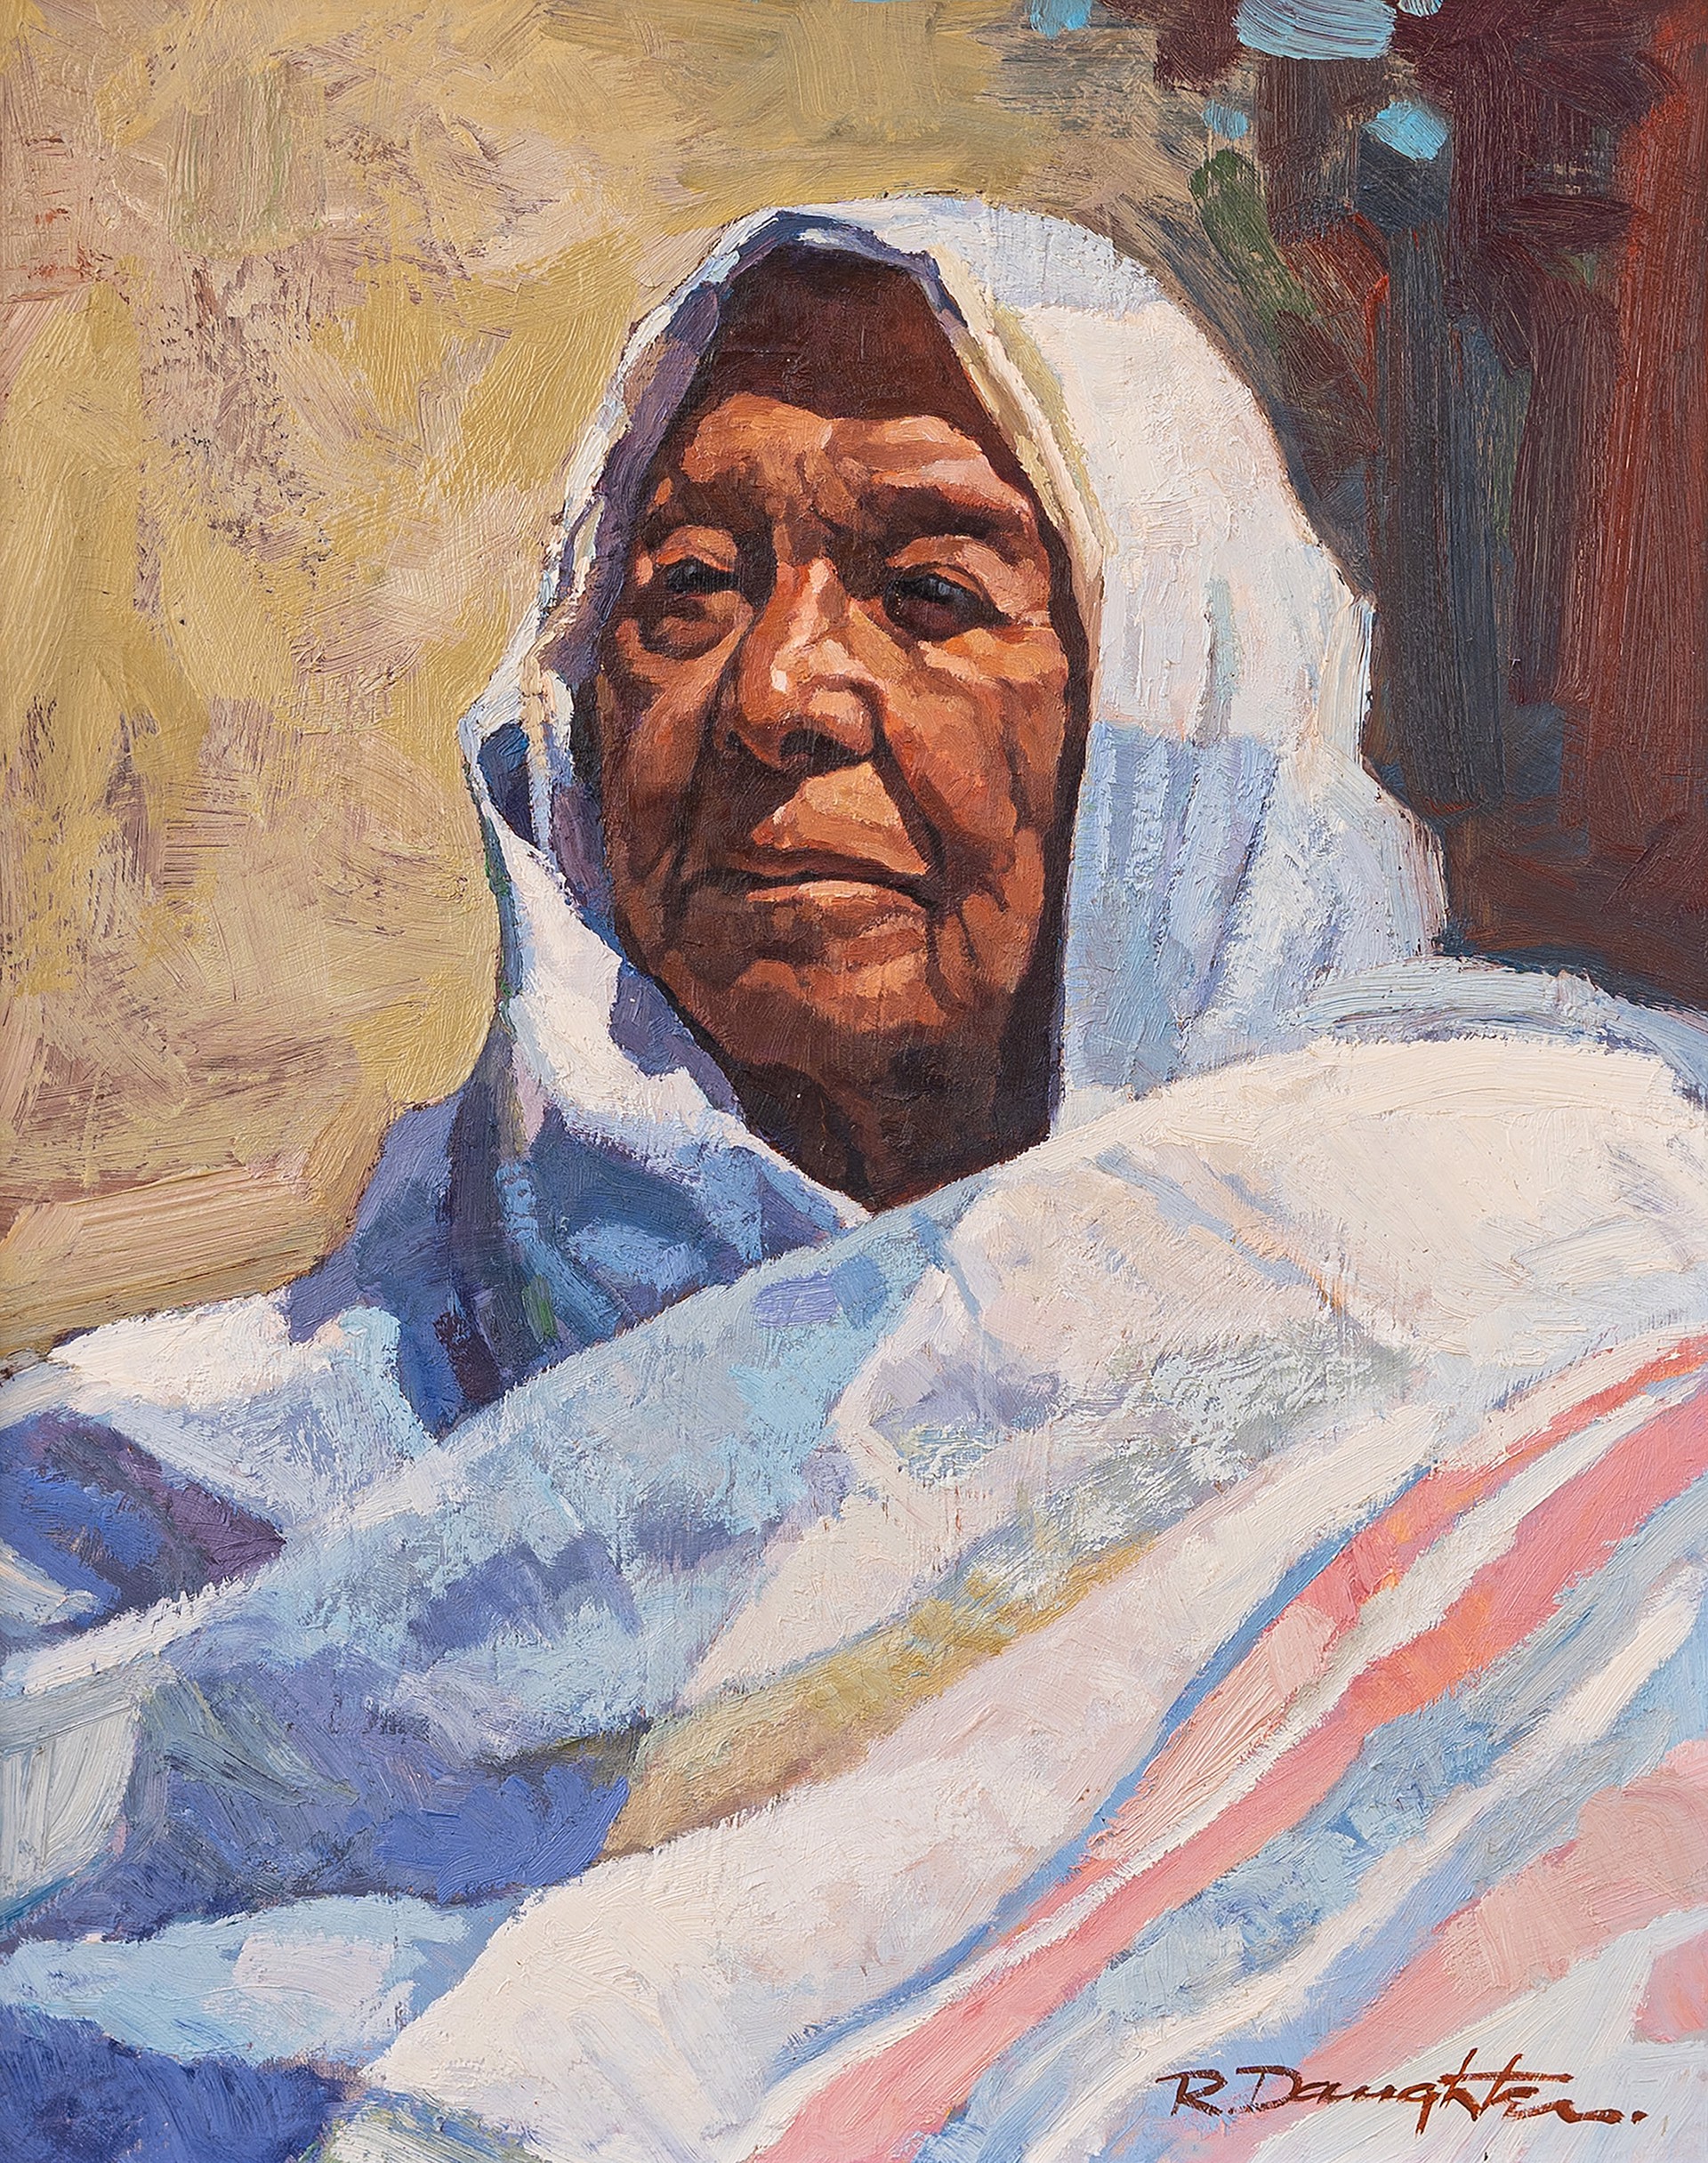 Taos Pueblo Elder by Robert Daughters (1929-2013)